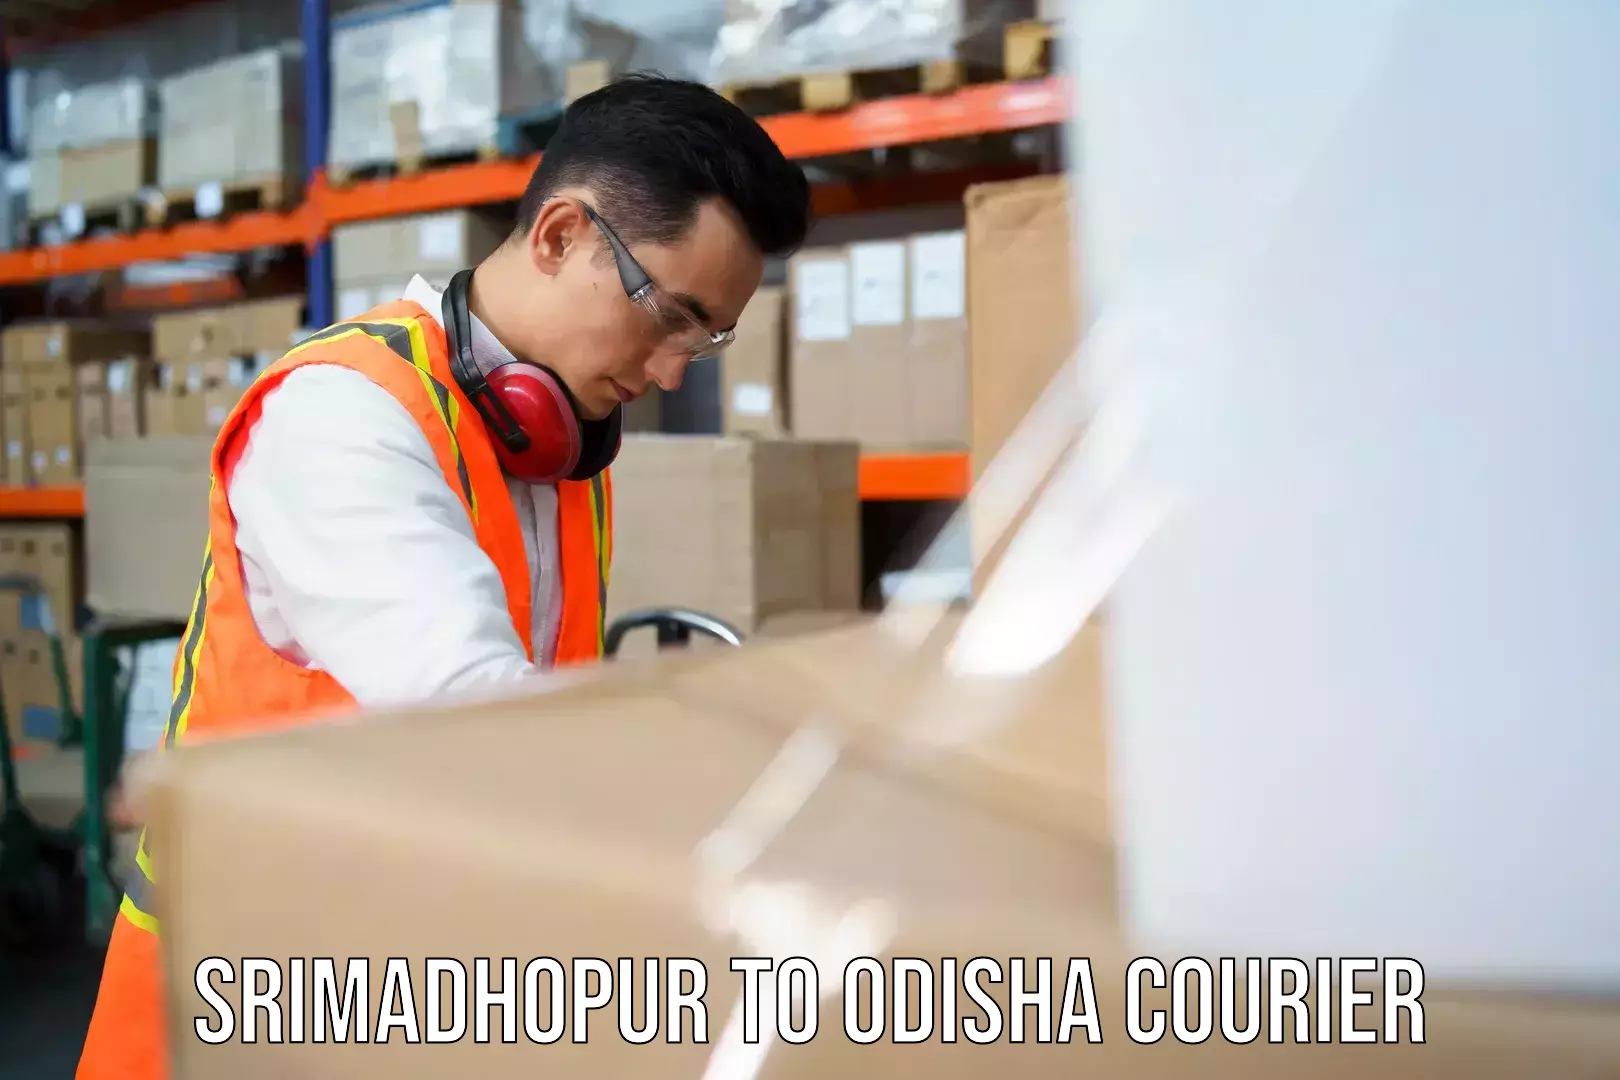 Doorstep delivery service Srimadhopur to Odisha